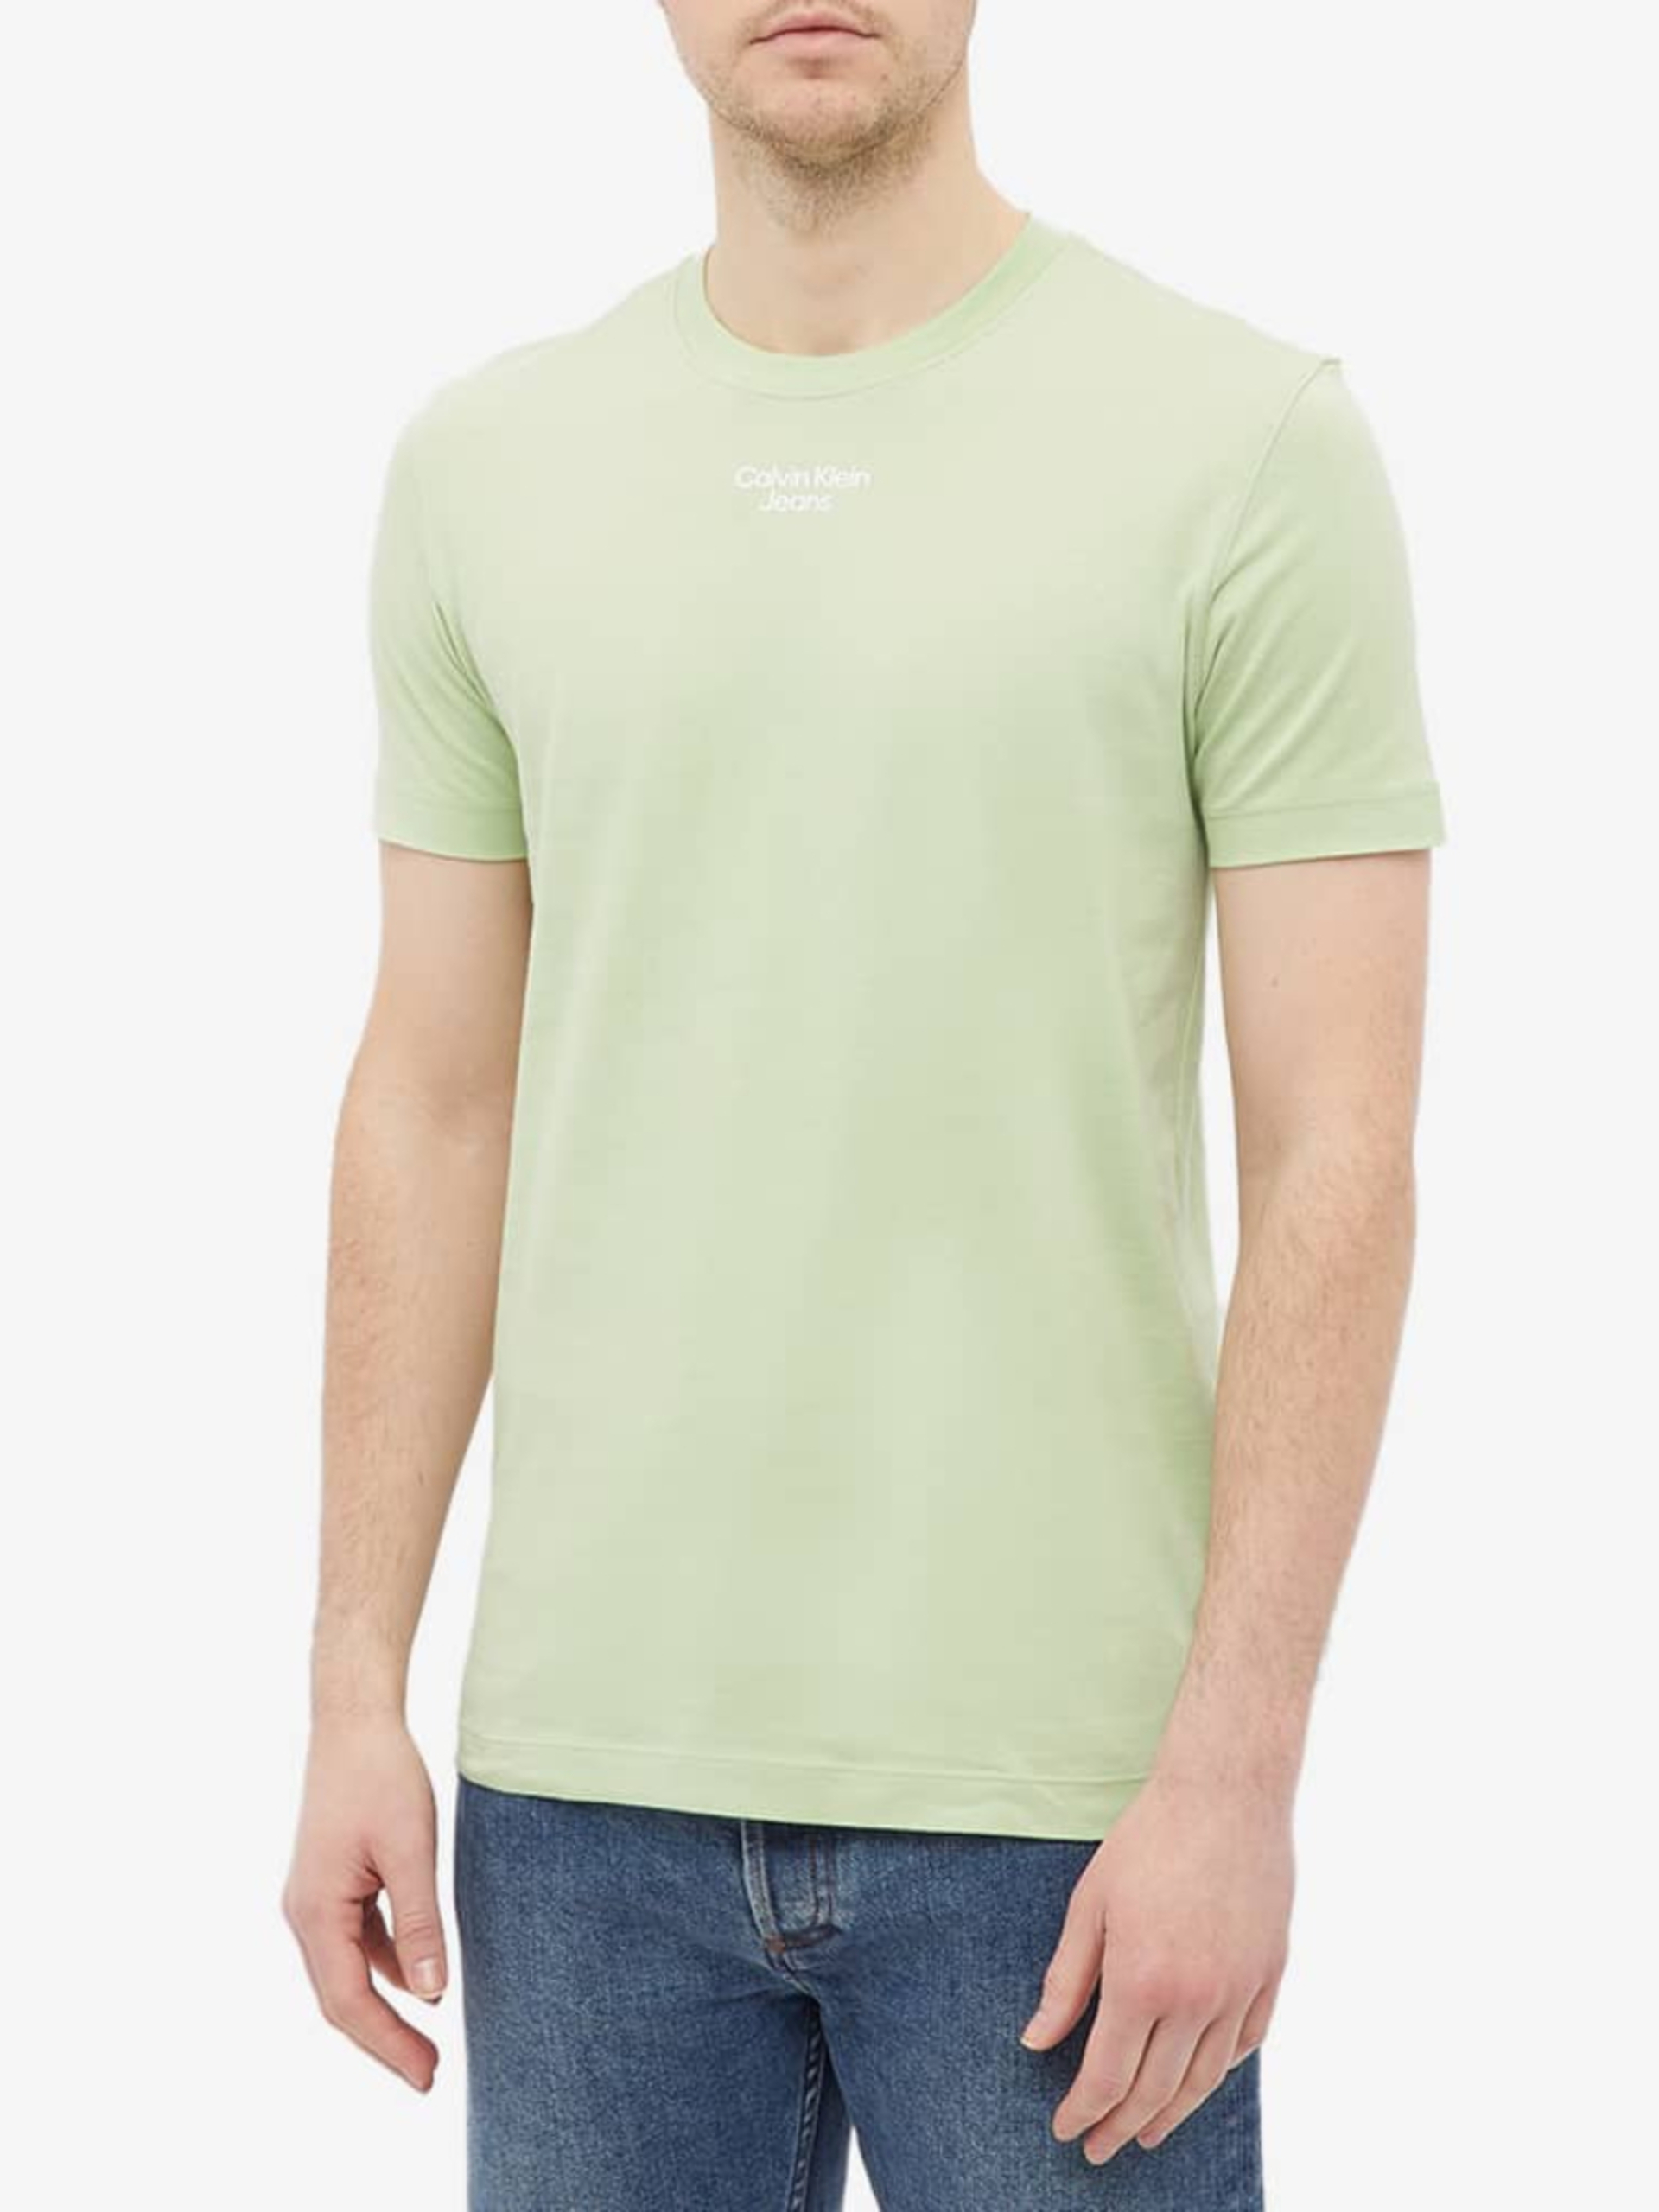 Calvin Klein pánské světle zelené tričko - XL (L99)